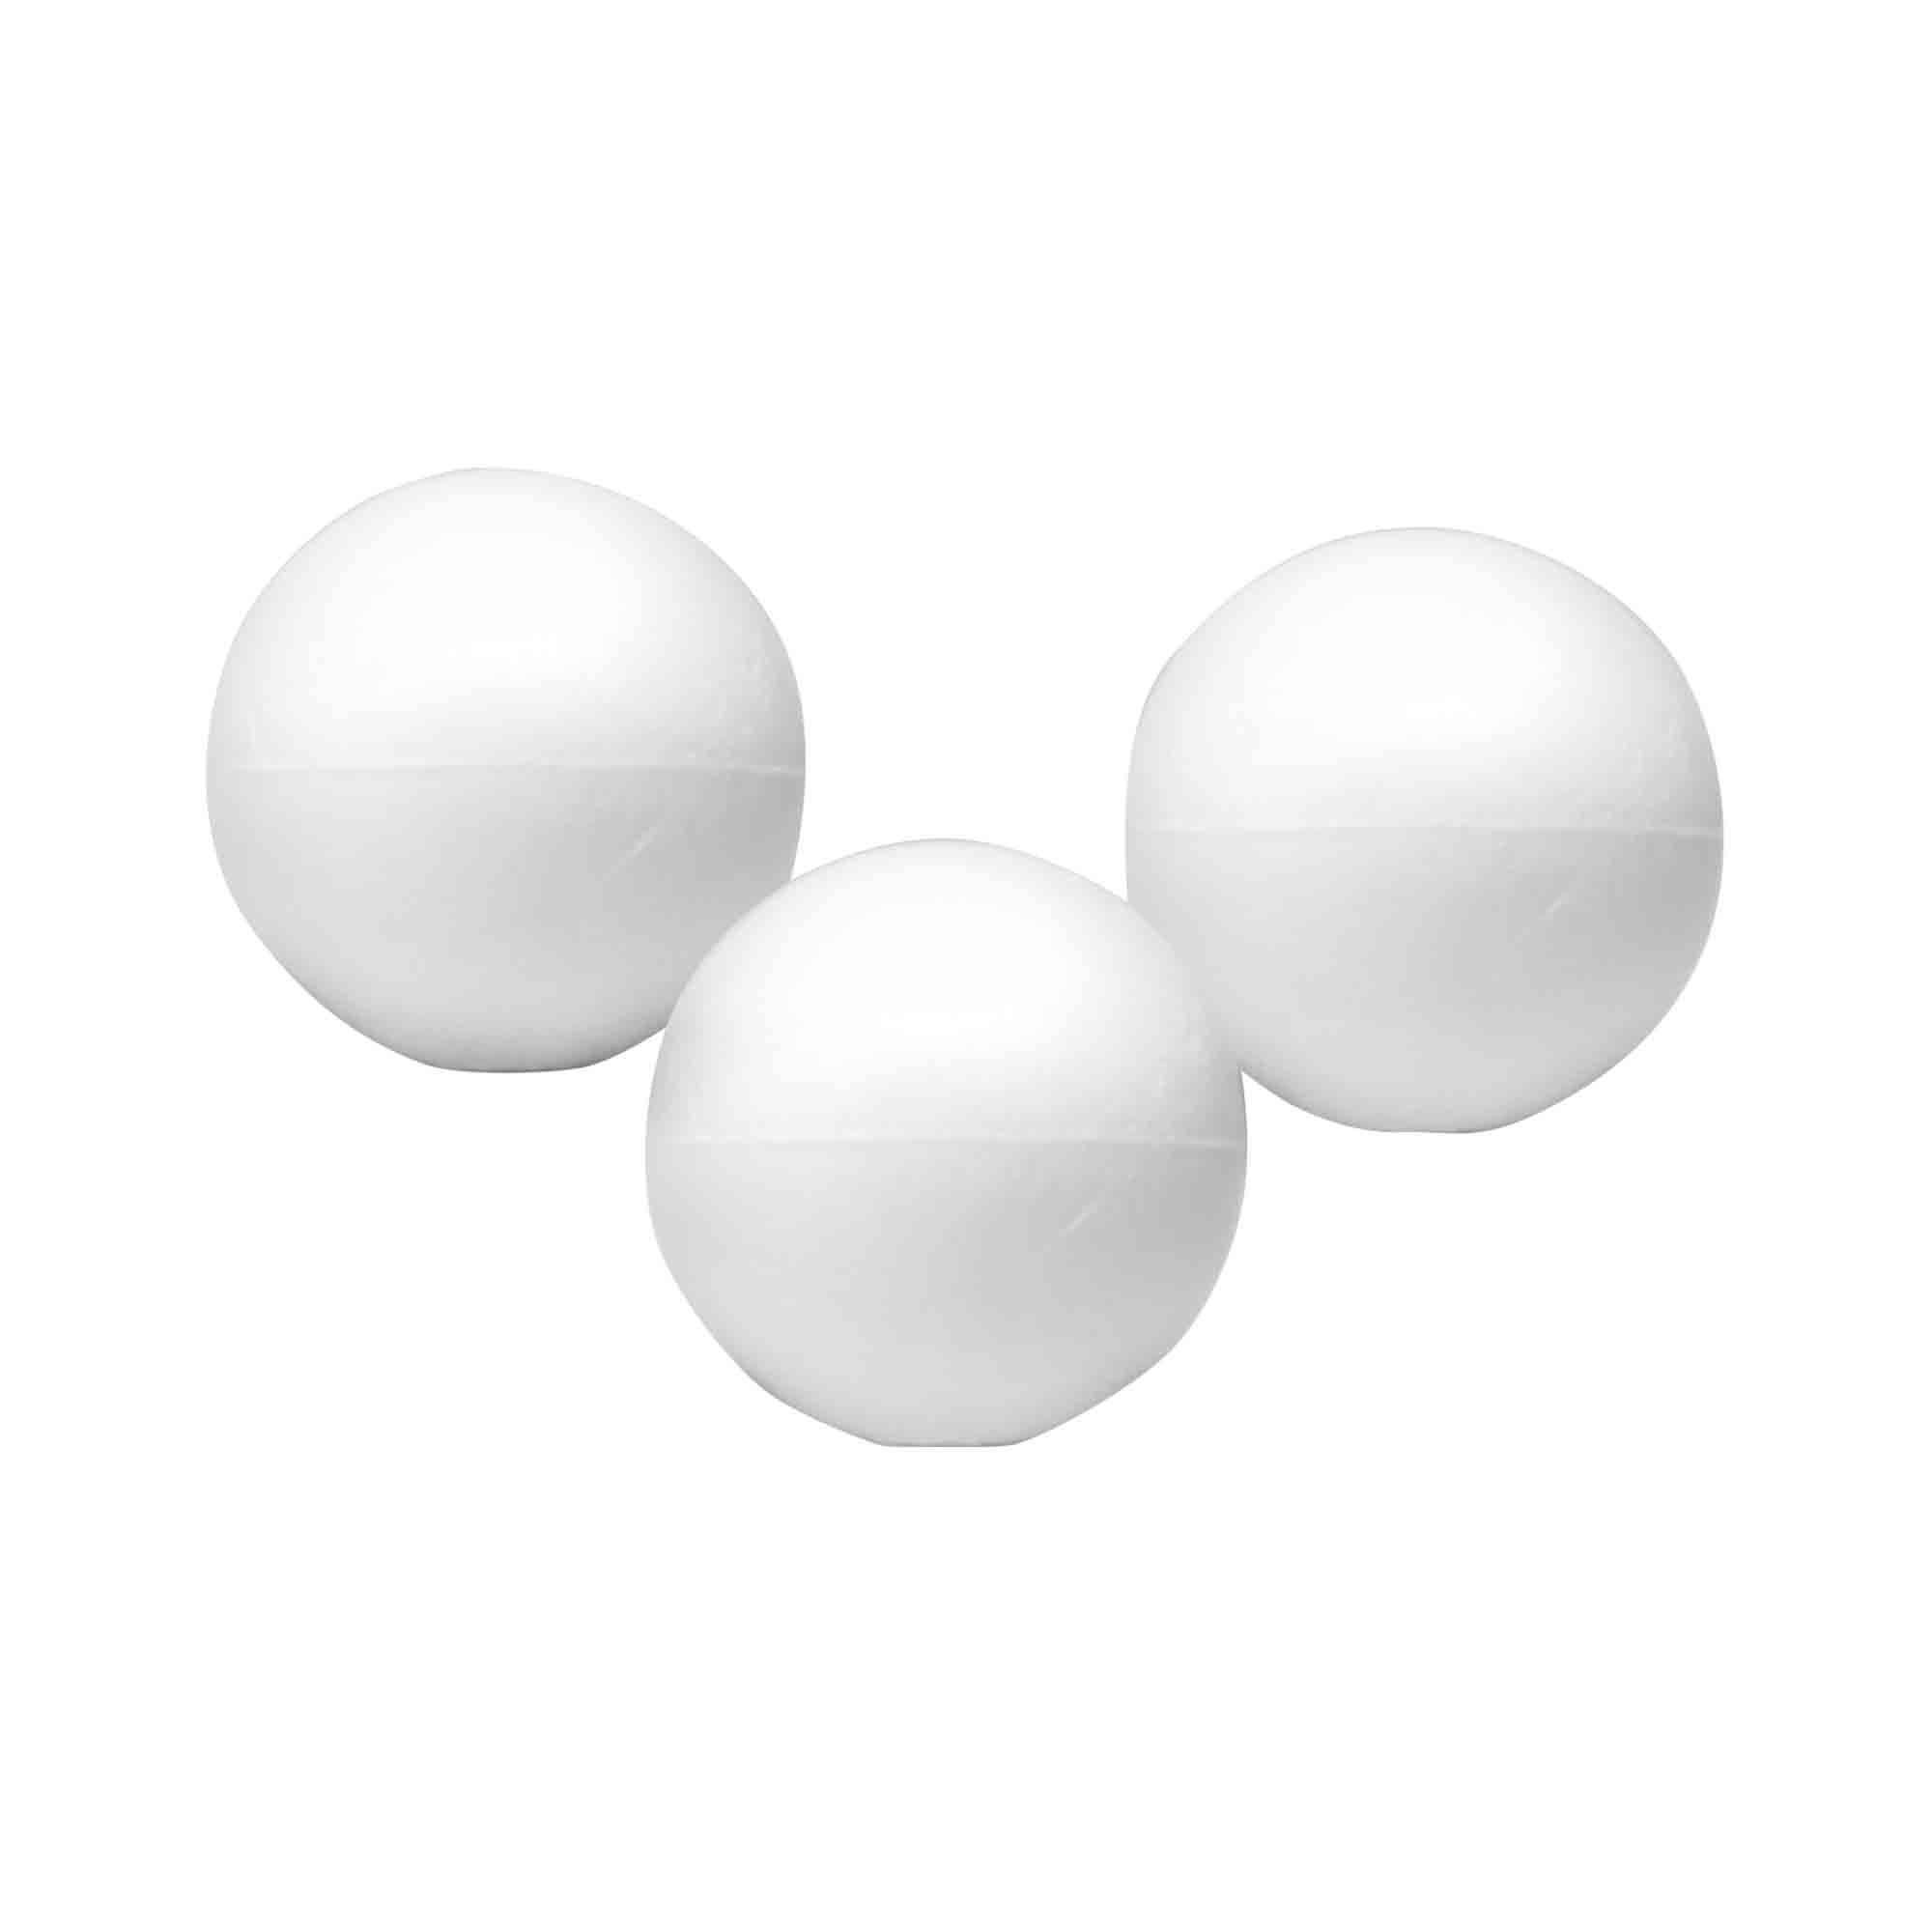 Purchase Wholesale foam balls. Free Returns & Net 60 Terms on Faire